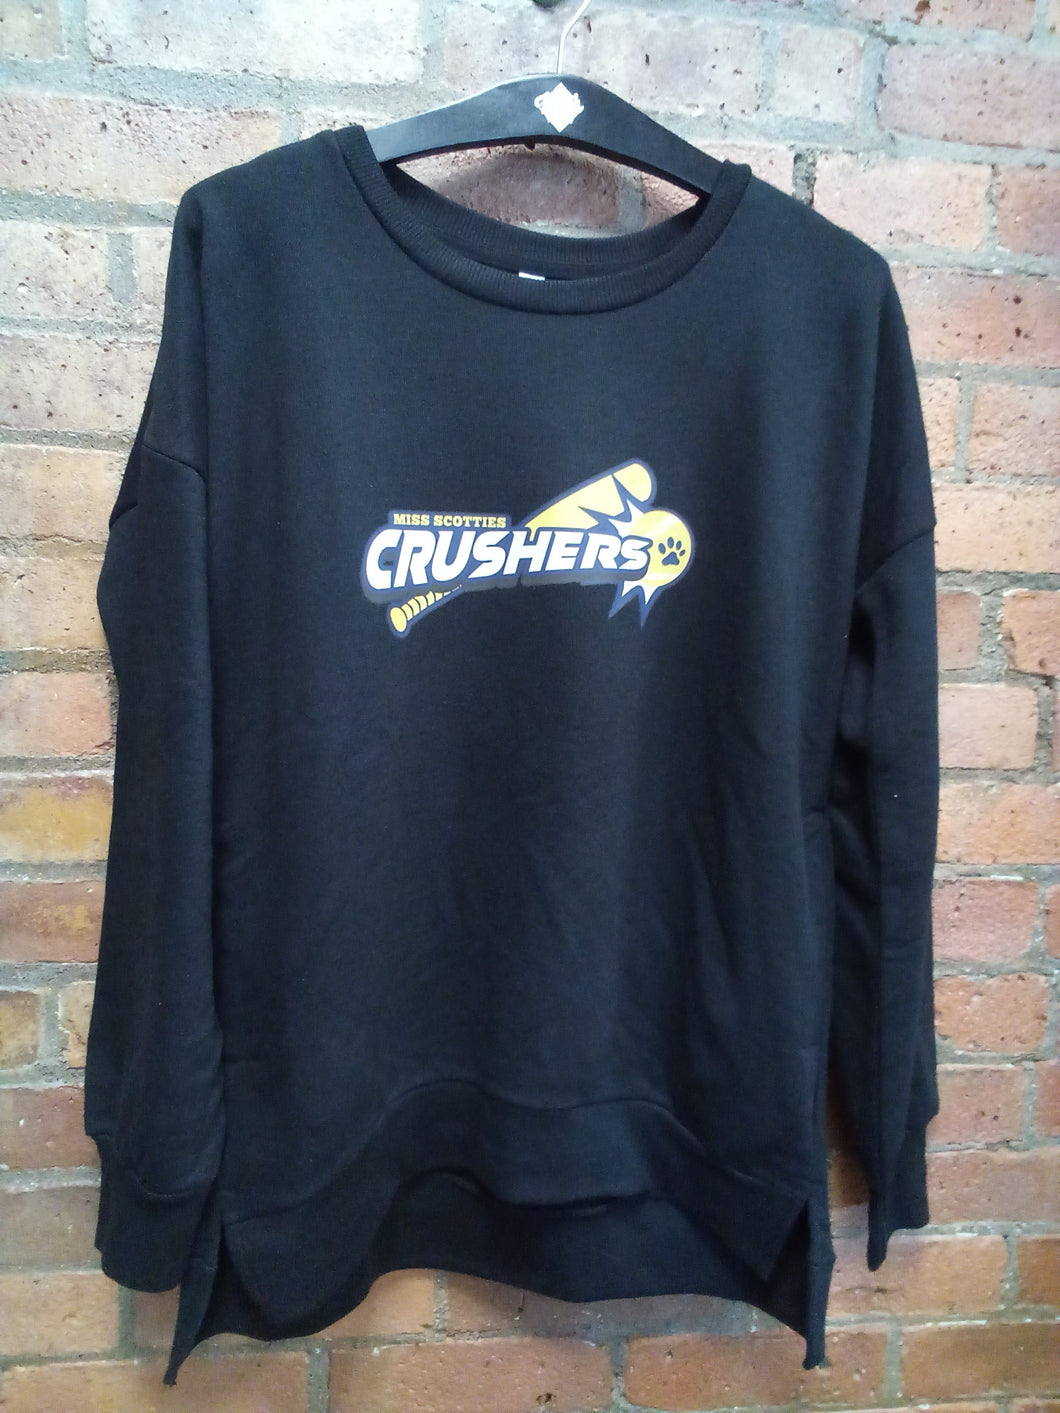 CLEARANCE - Miss Scotties Crushers Ladies Crewneck Sweatshirt - Size Medium